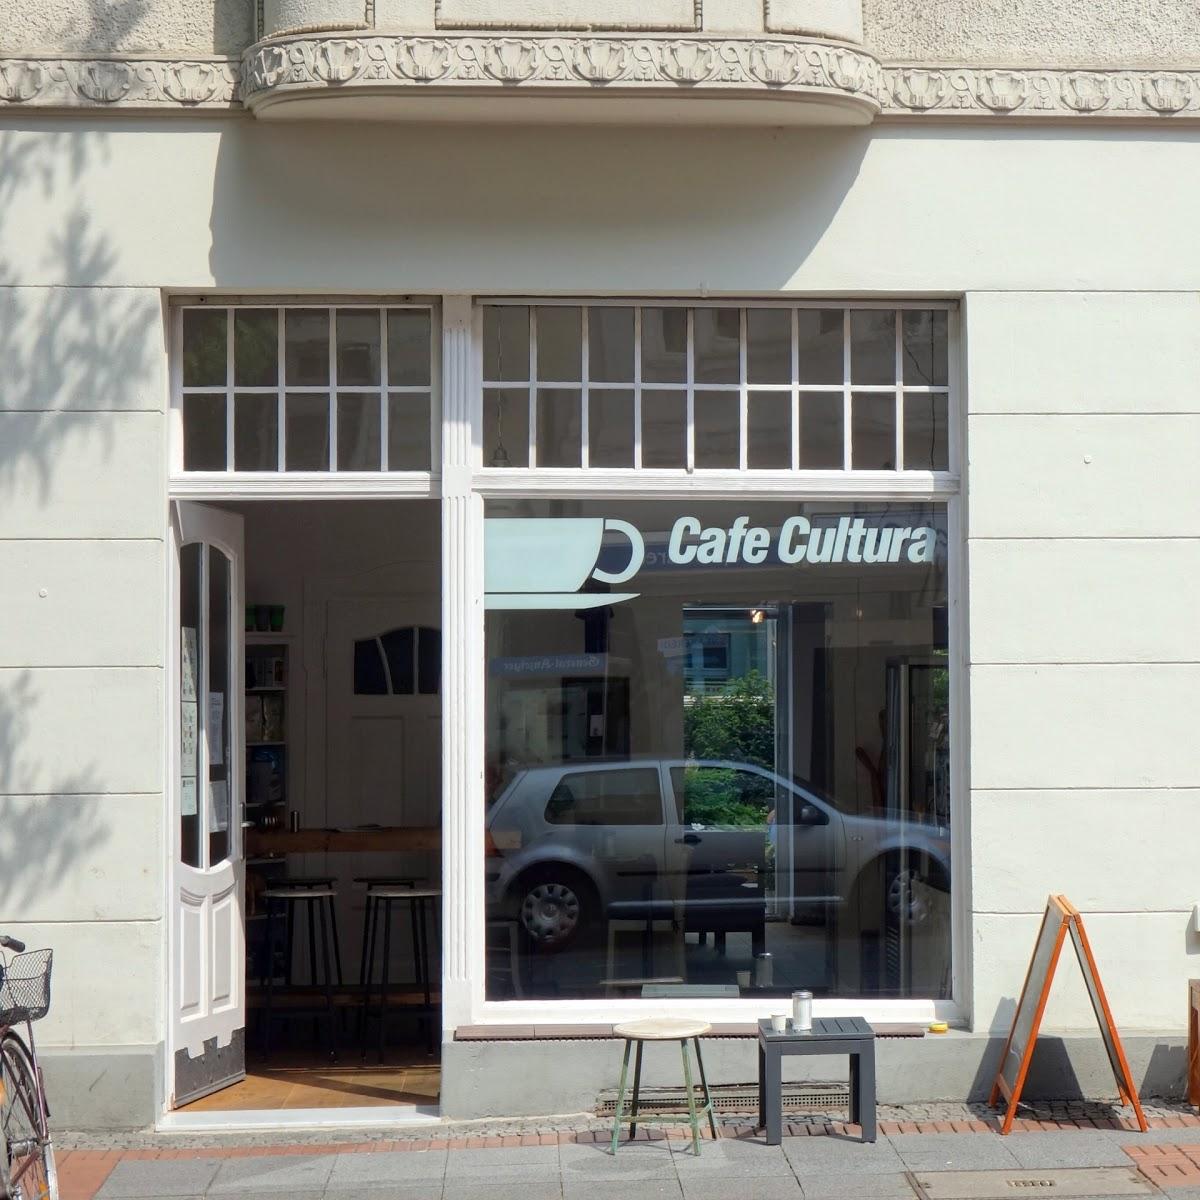 Restaurant "Cafe das Cultura" in Bonn